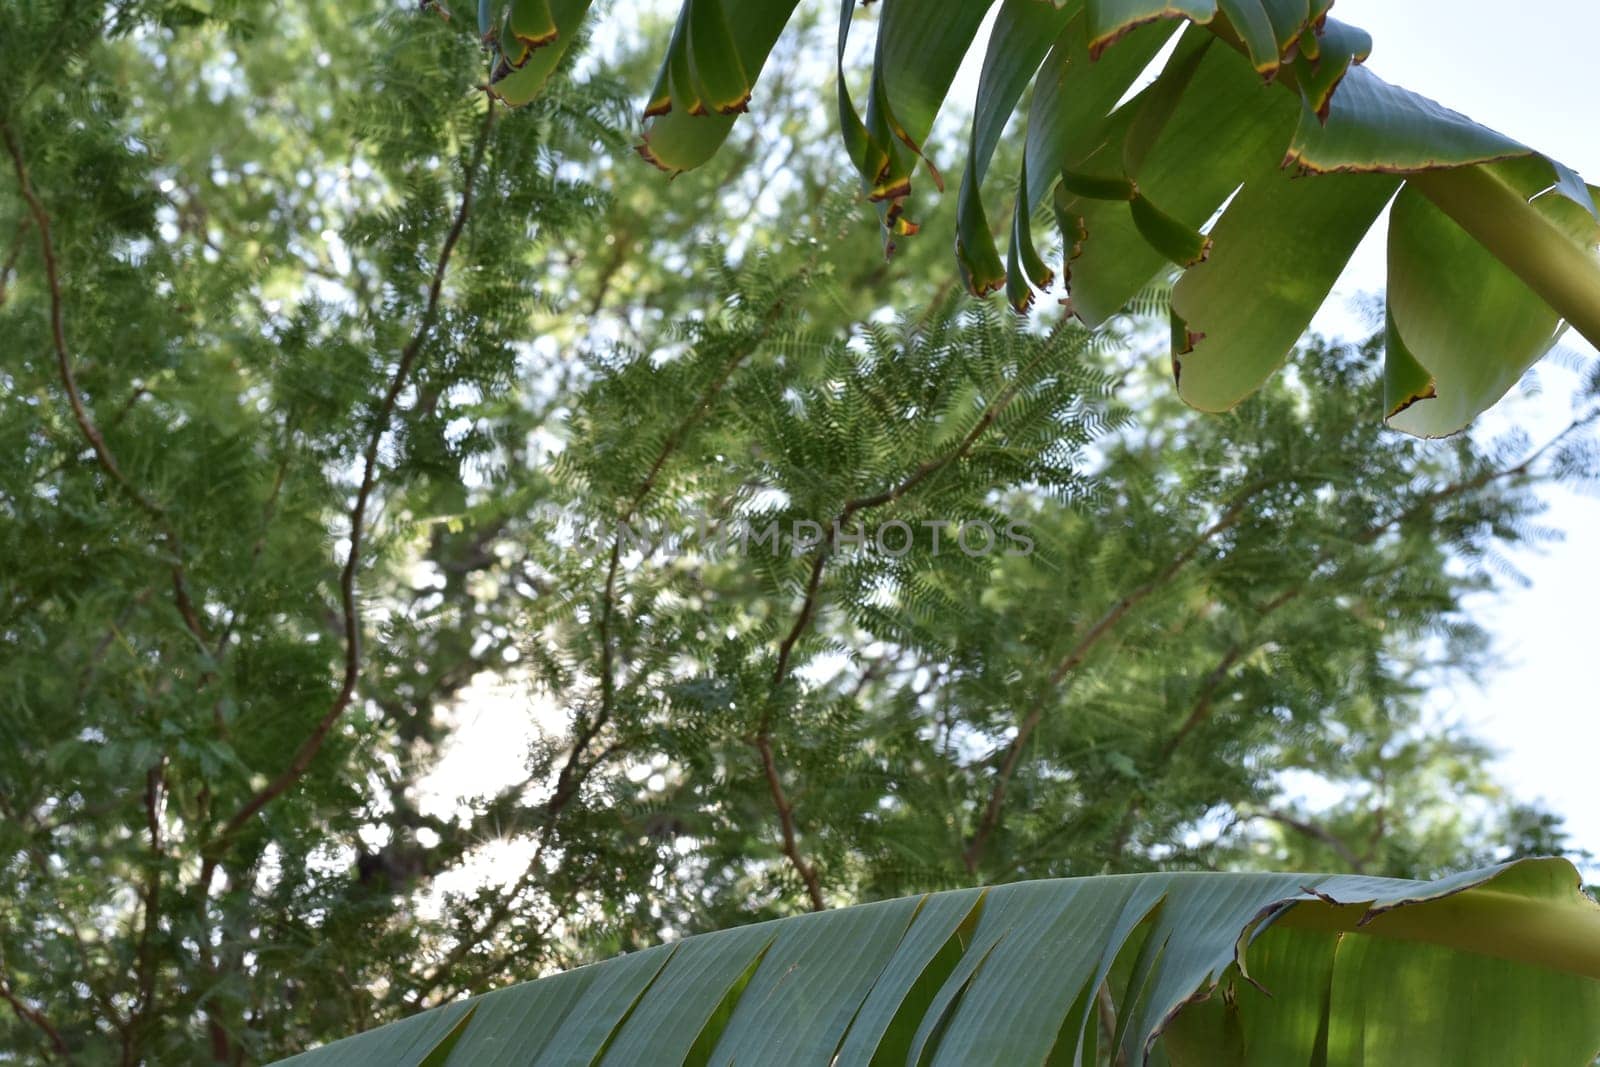 Banana Tree and Mesquite Leaves Shading Arizona Backyard by grumblytumbleweed